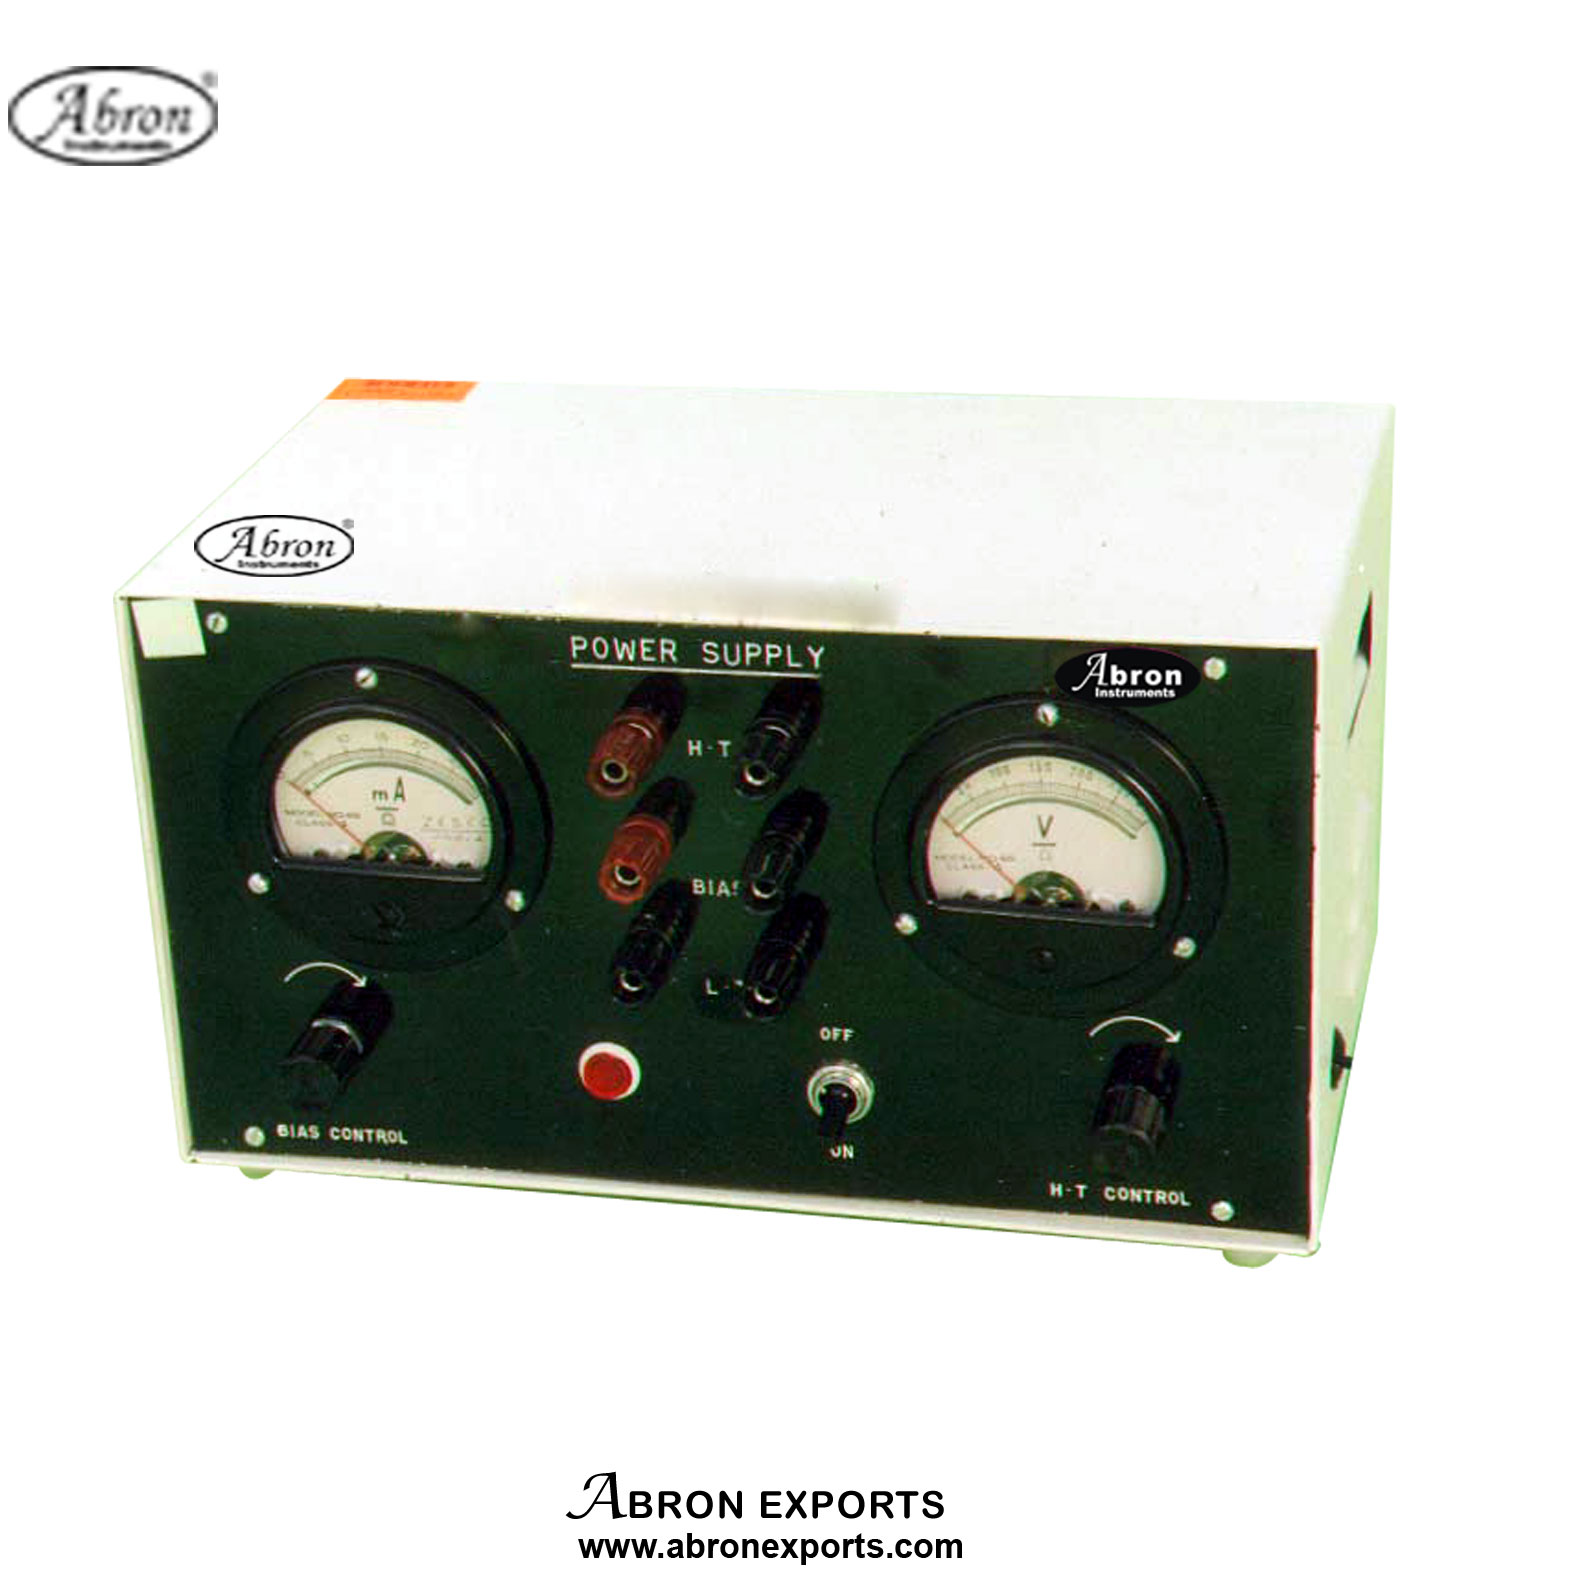 Power Supply Regulated LT 6.3V AC Fixed HT 0-300V DC Bias 0-25V DC for Diode Triode Valves with 2 Dial meters AE-1375A 